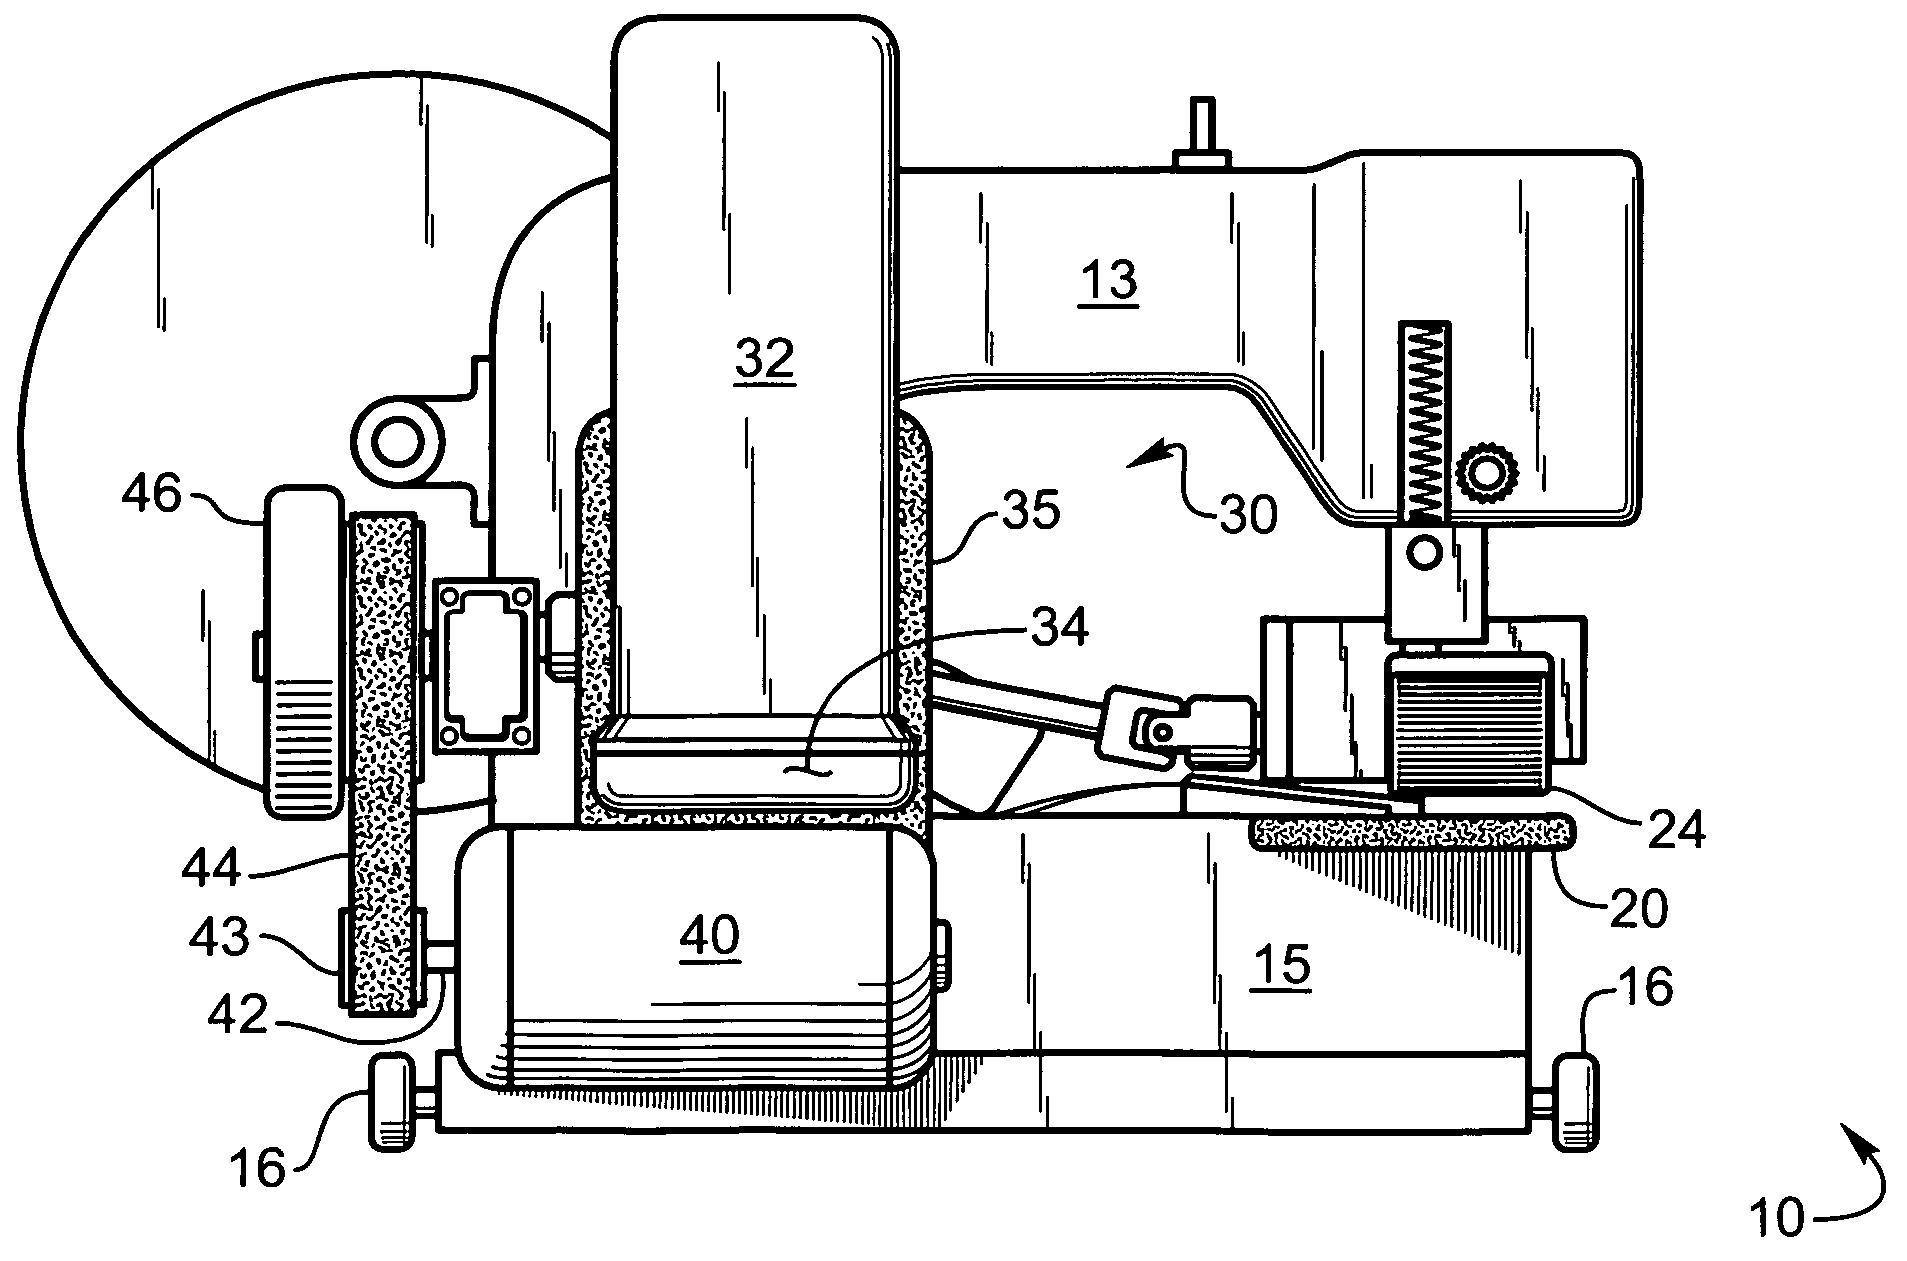 Battery-operated sewing machine